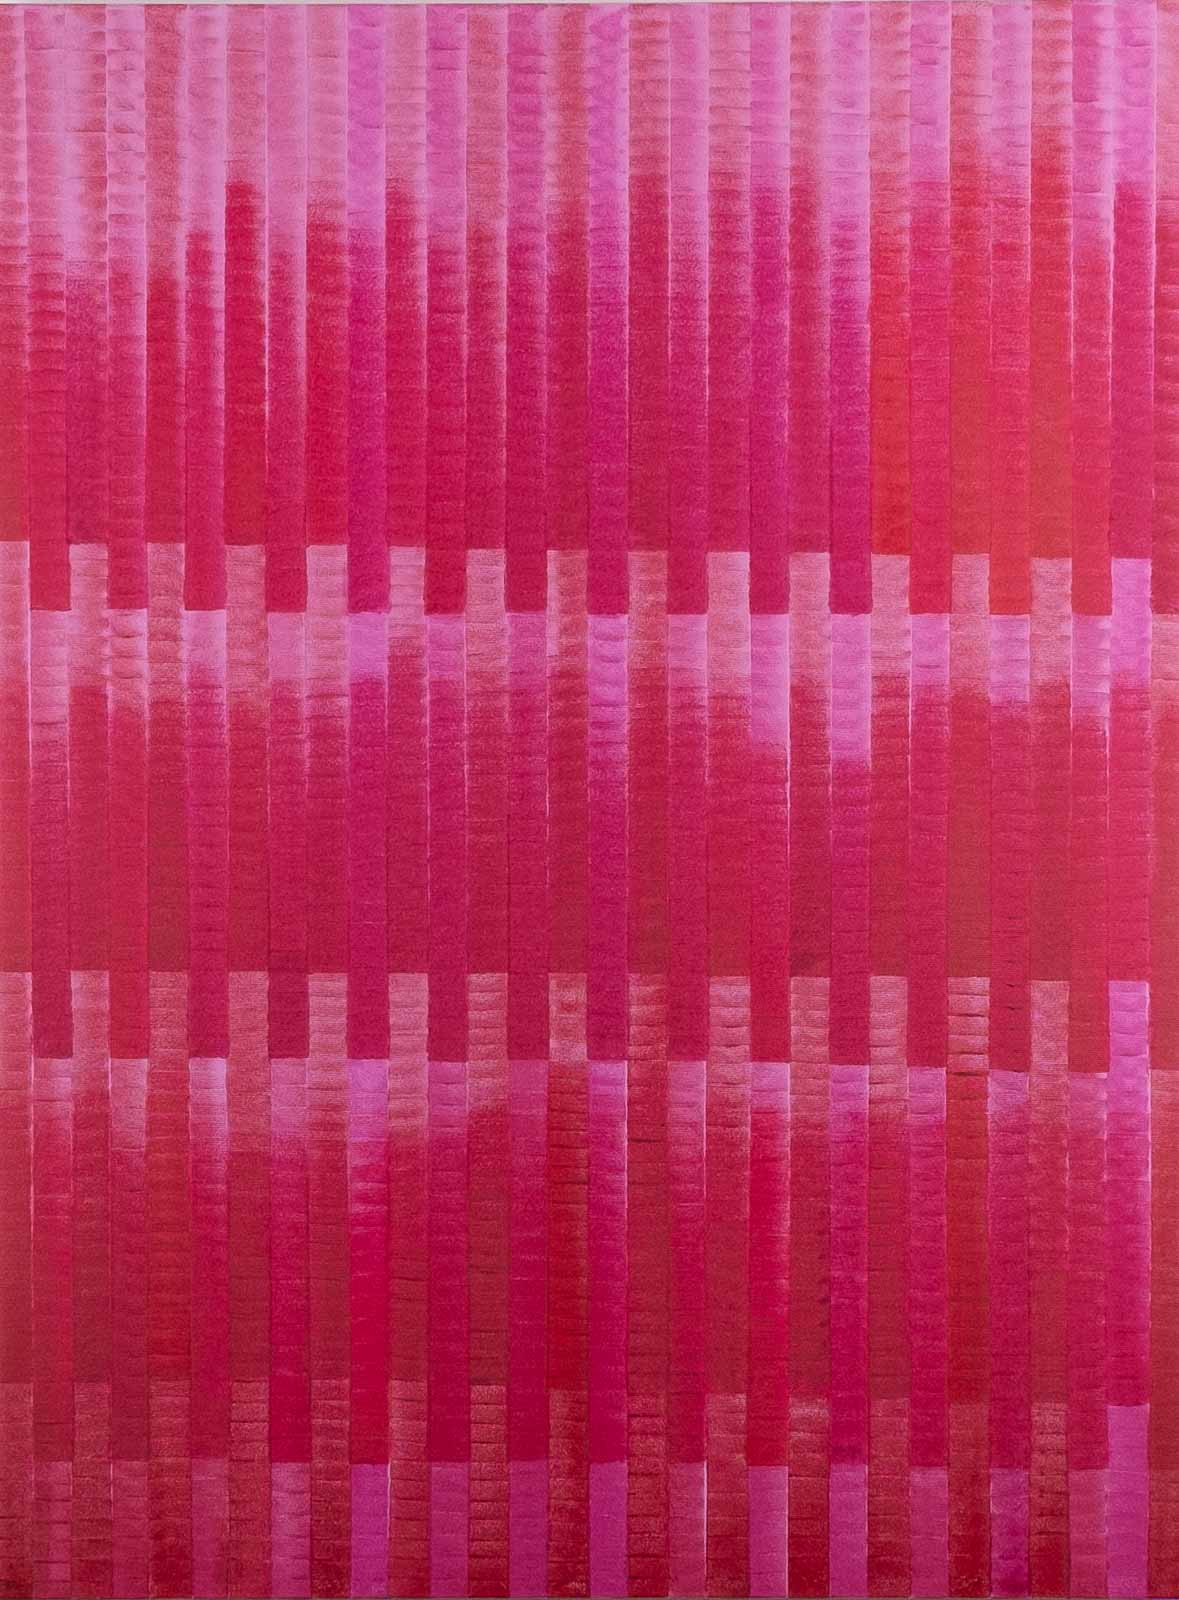 SV RHYTHM PINK s - Acrylic on canvas - Format 80X60